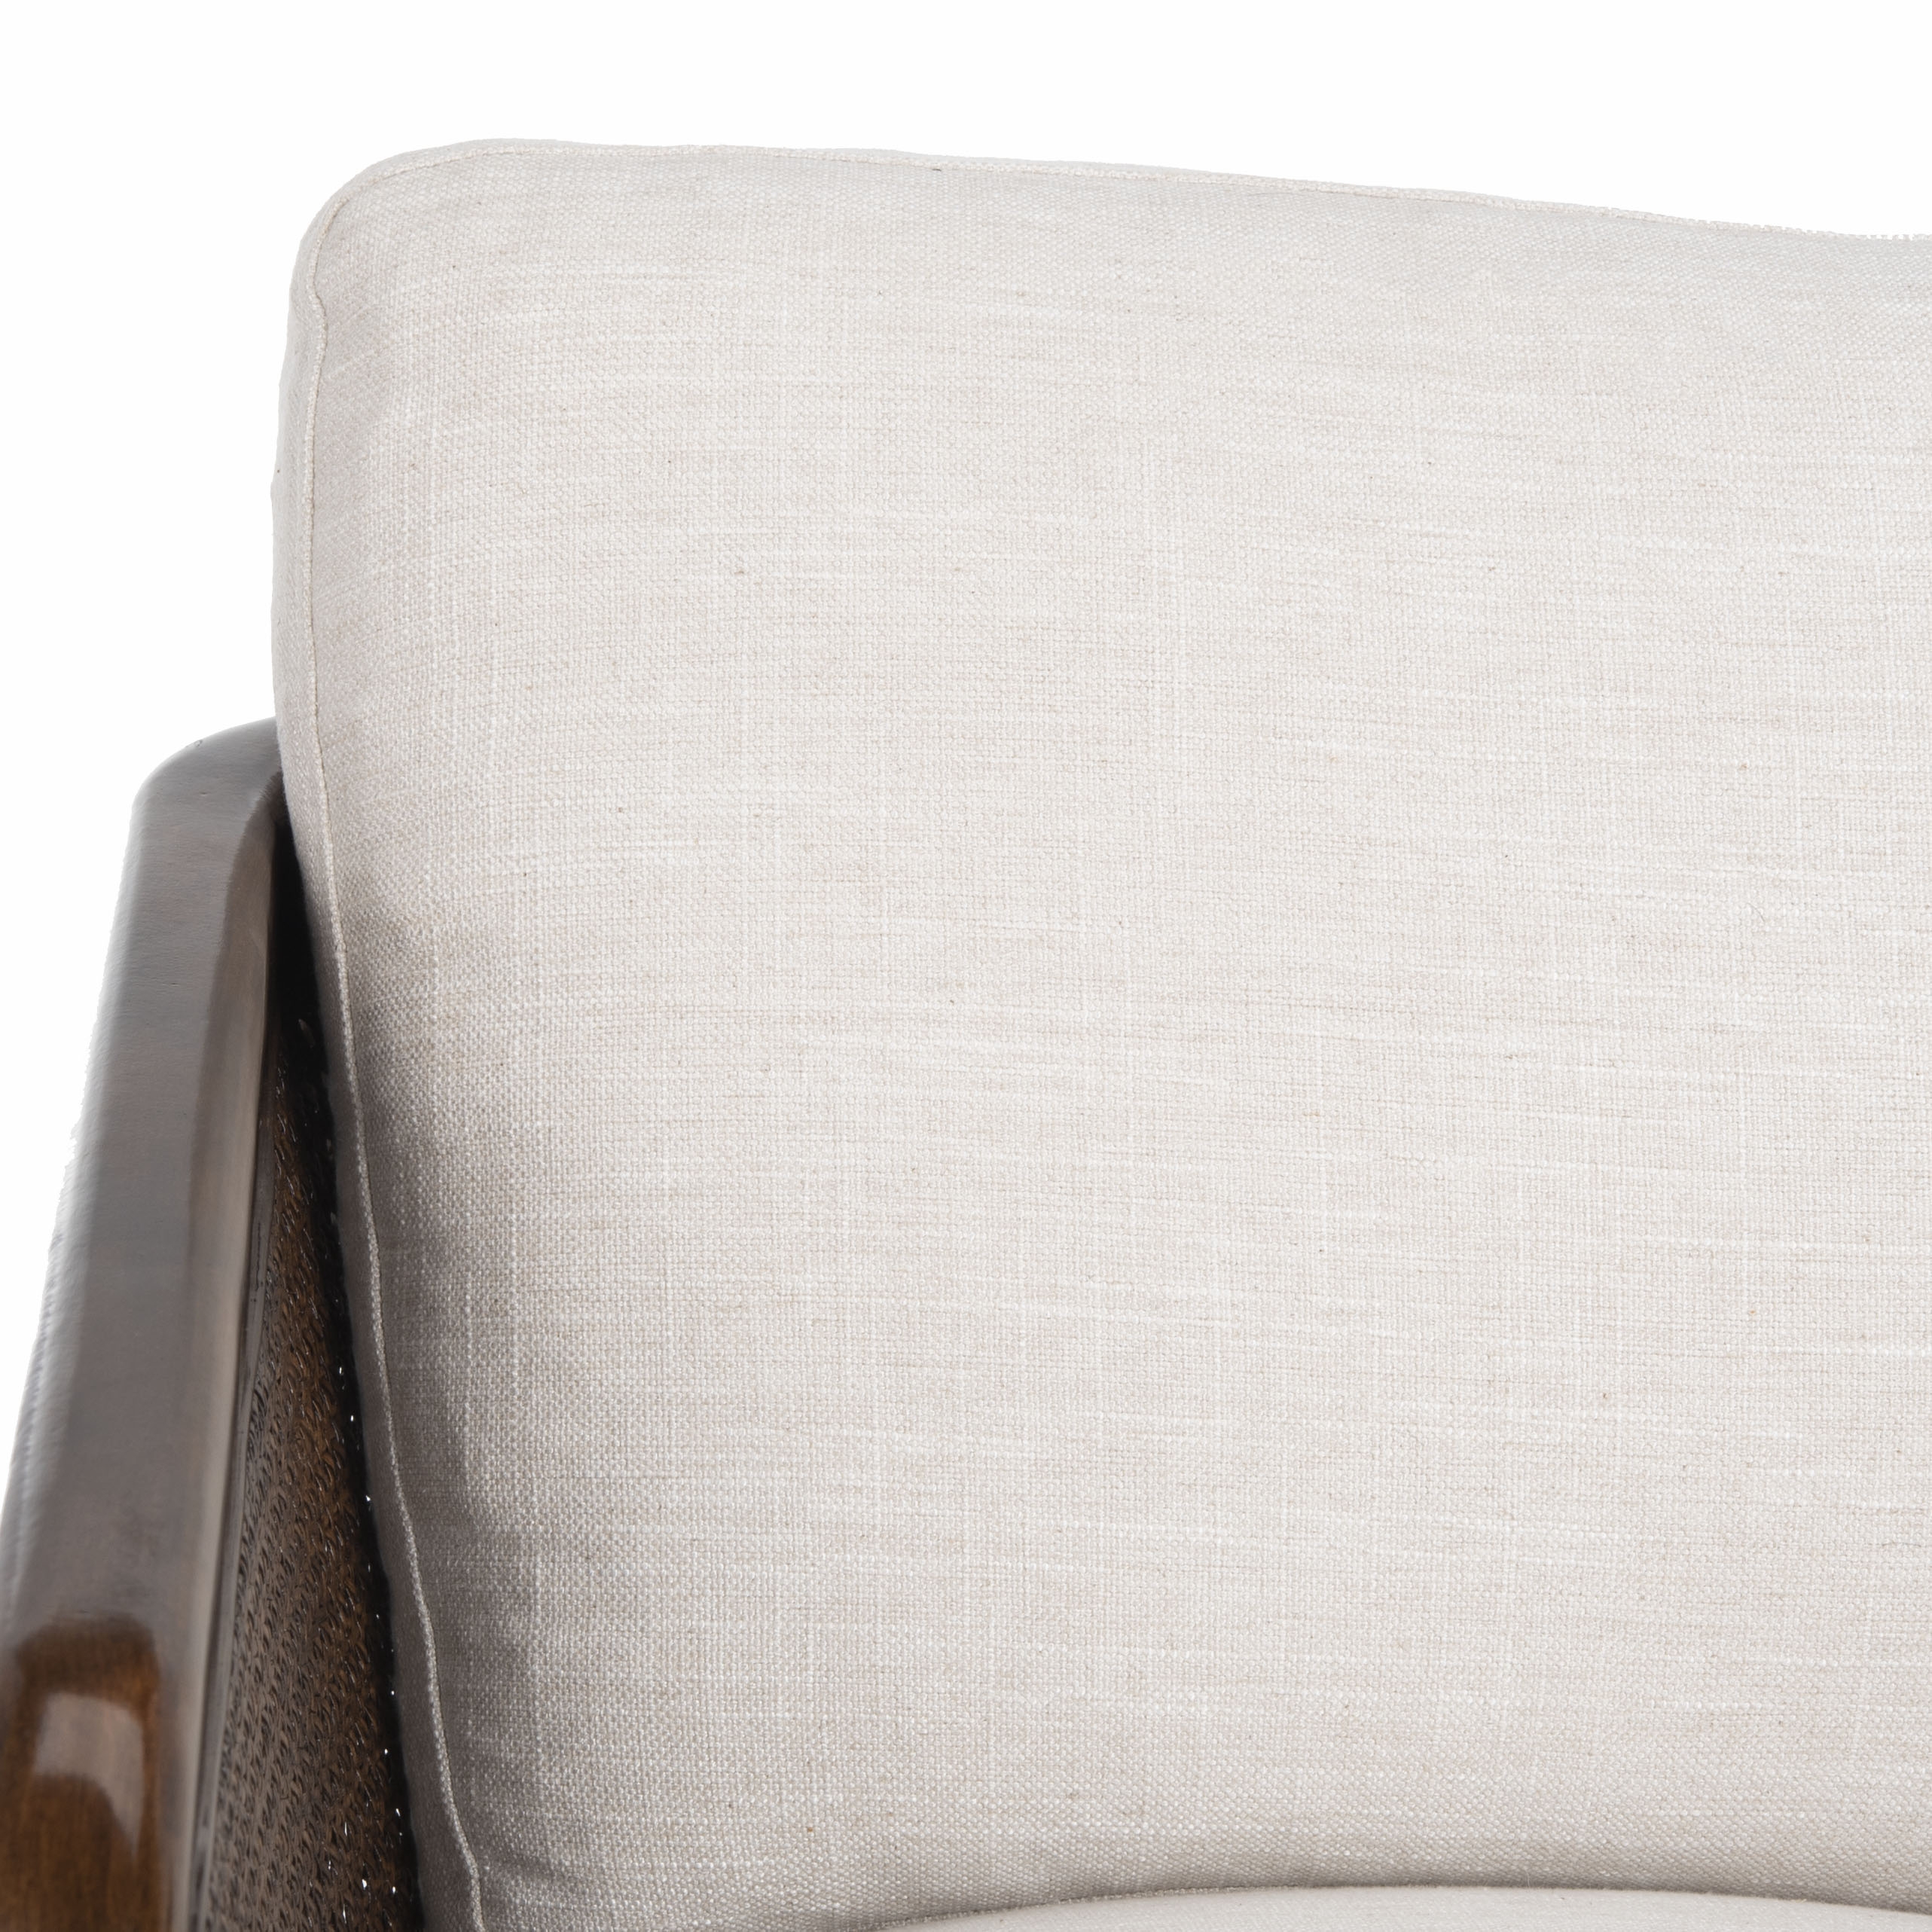 Caruso Barrel Back Chair - Oatmeal - Arlo Home - Image 5